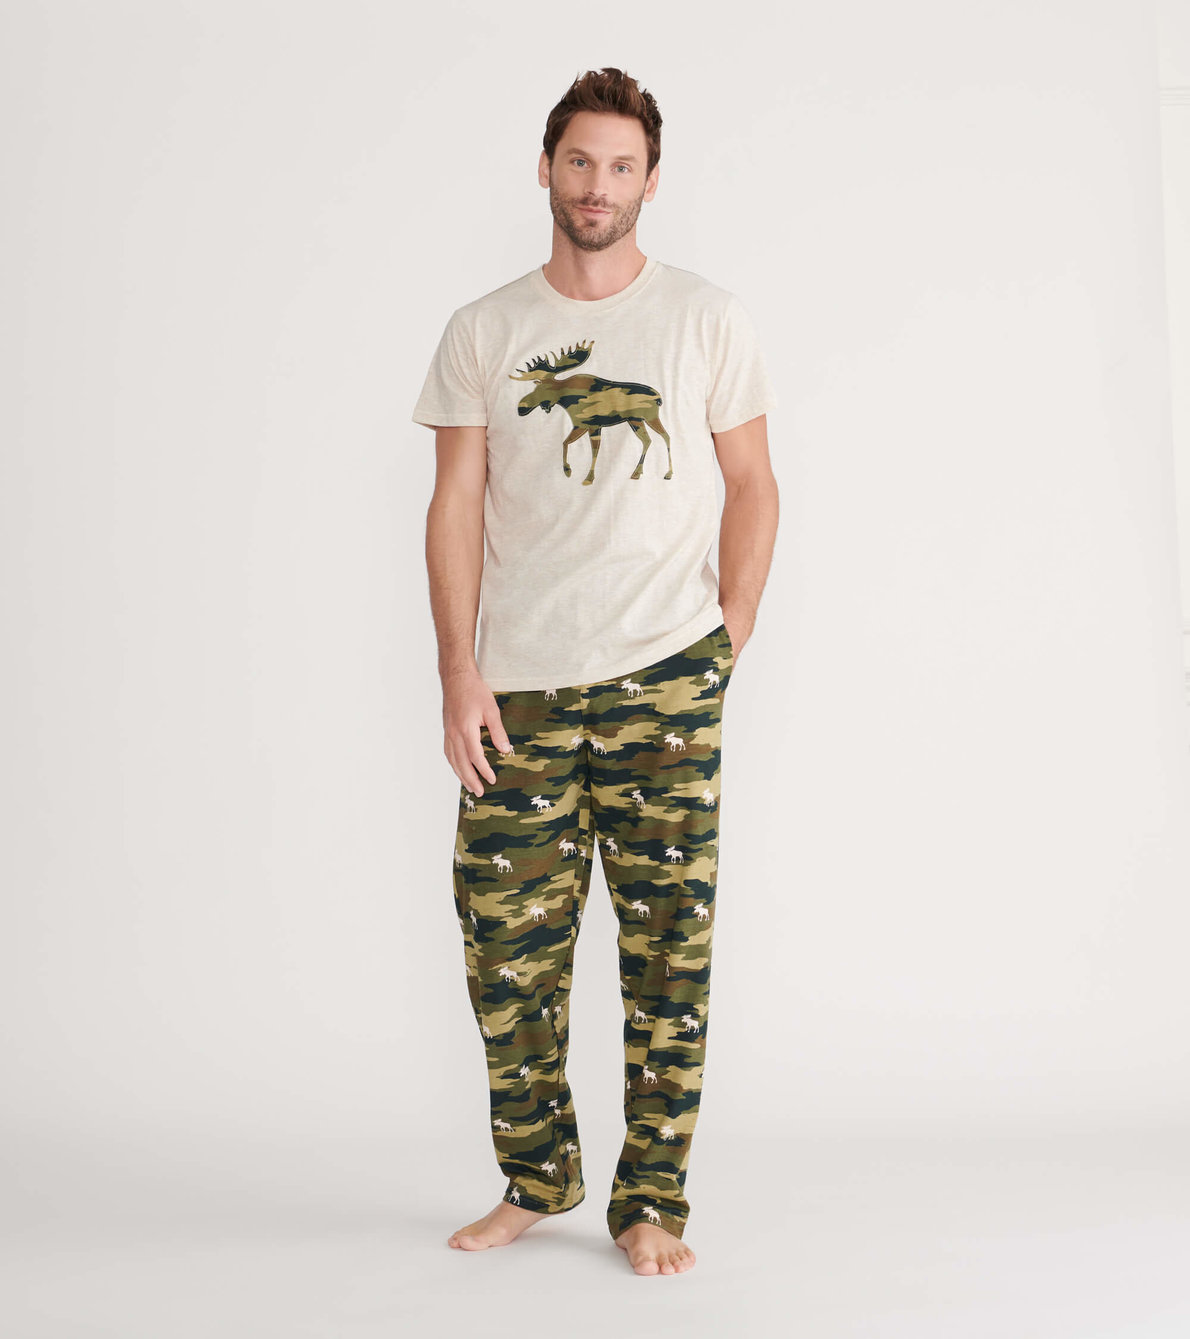 View larger image of Camooseflage Men's Tee and Pants Pajama Separates